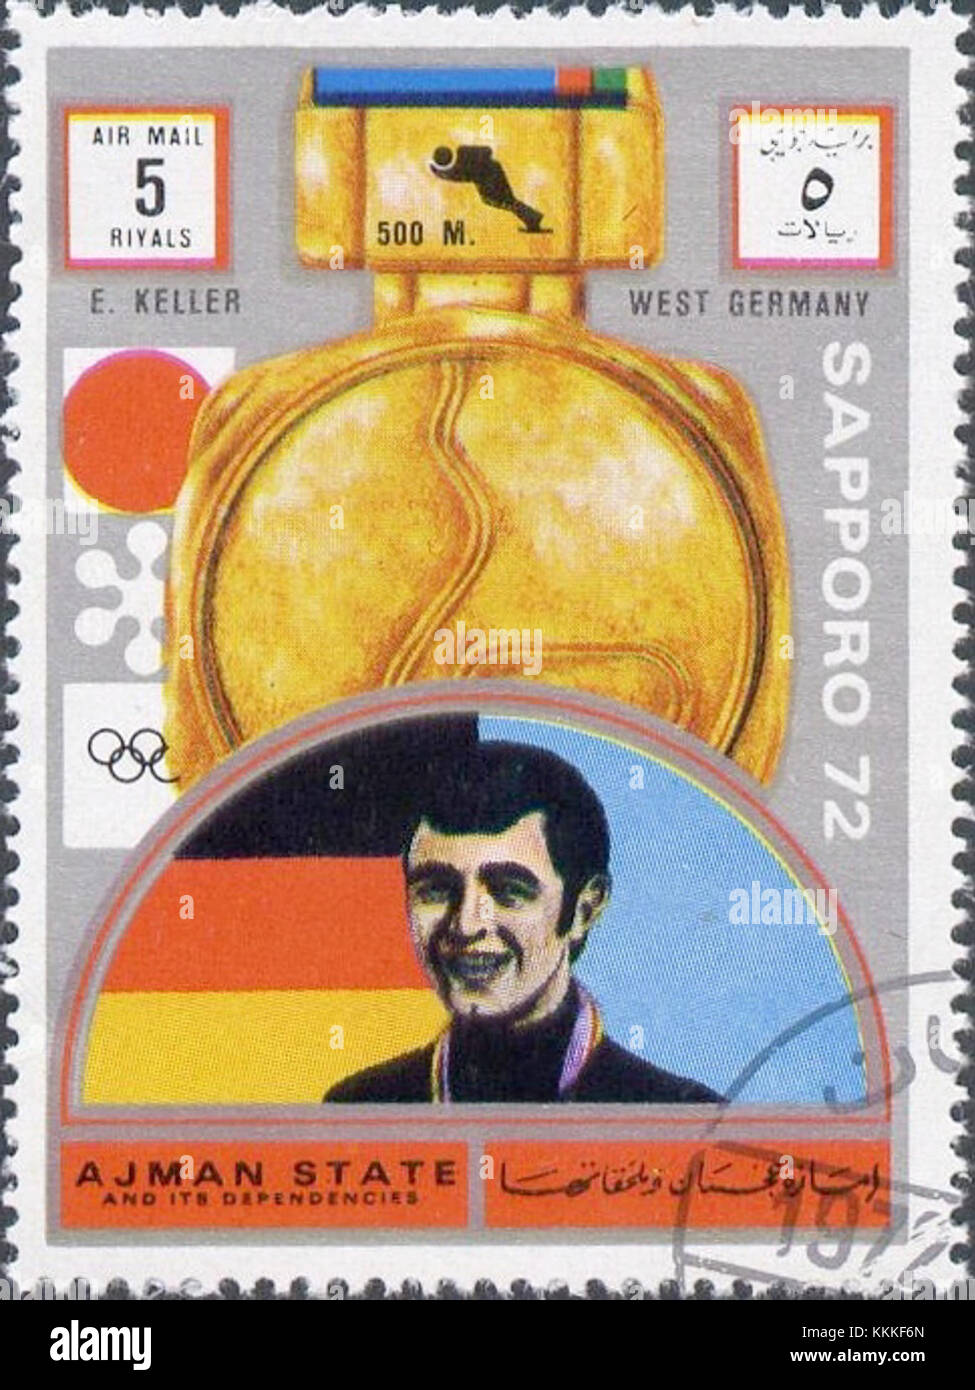 1972 stamp of Ajman Erhard Keller Stock Photo